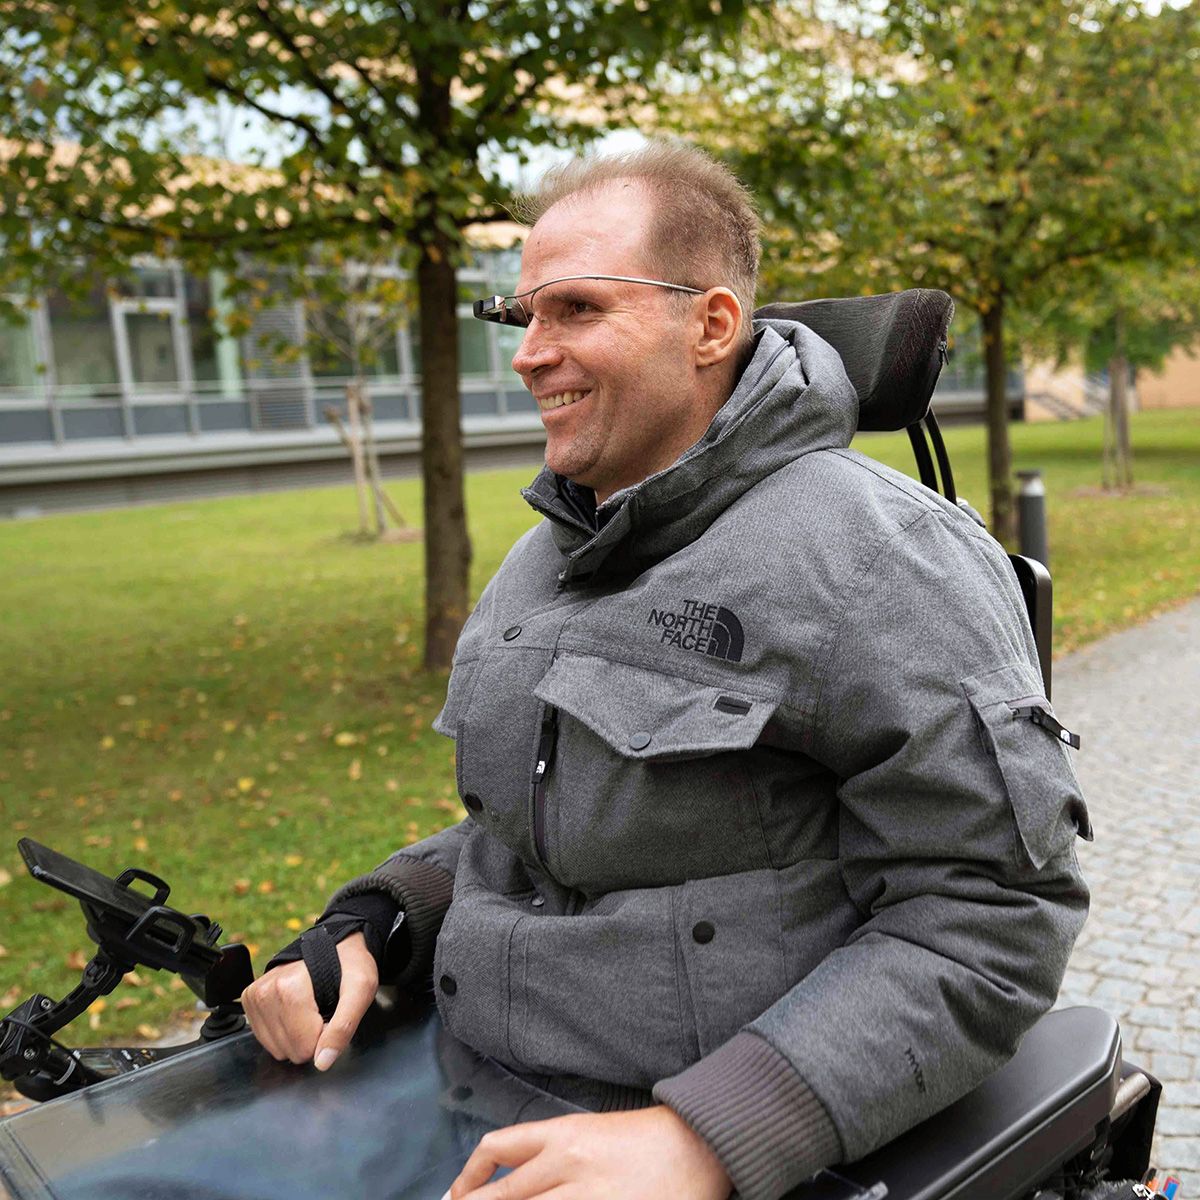 Munevo user enjoying a ride through the park in their wheelchair